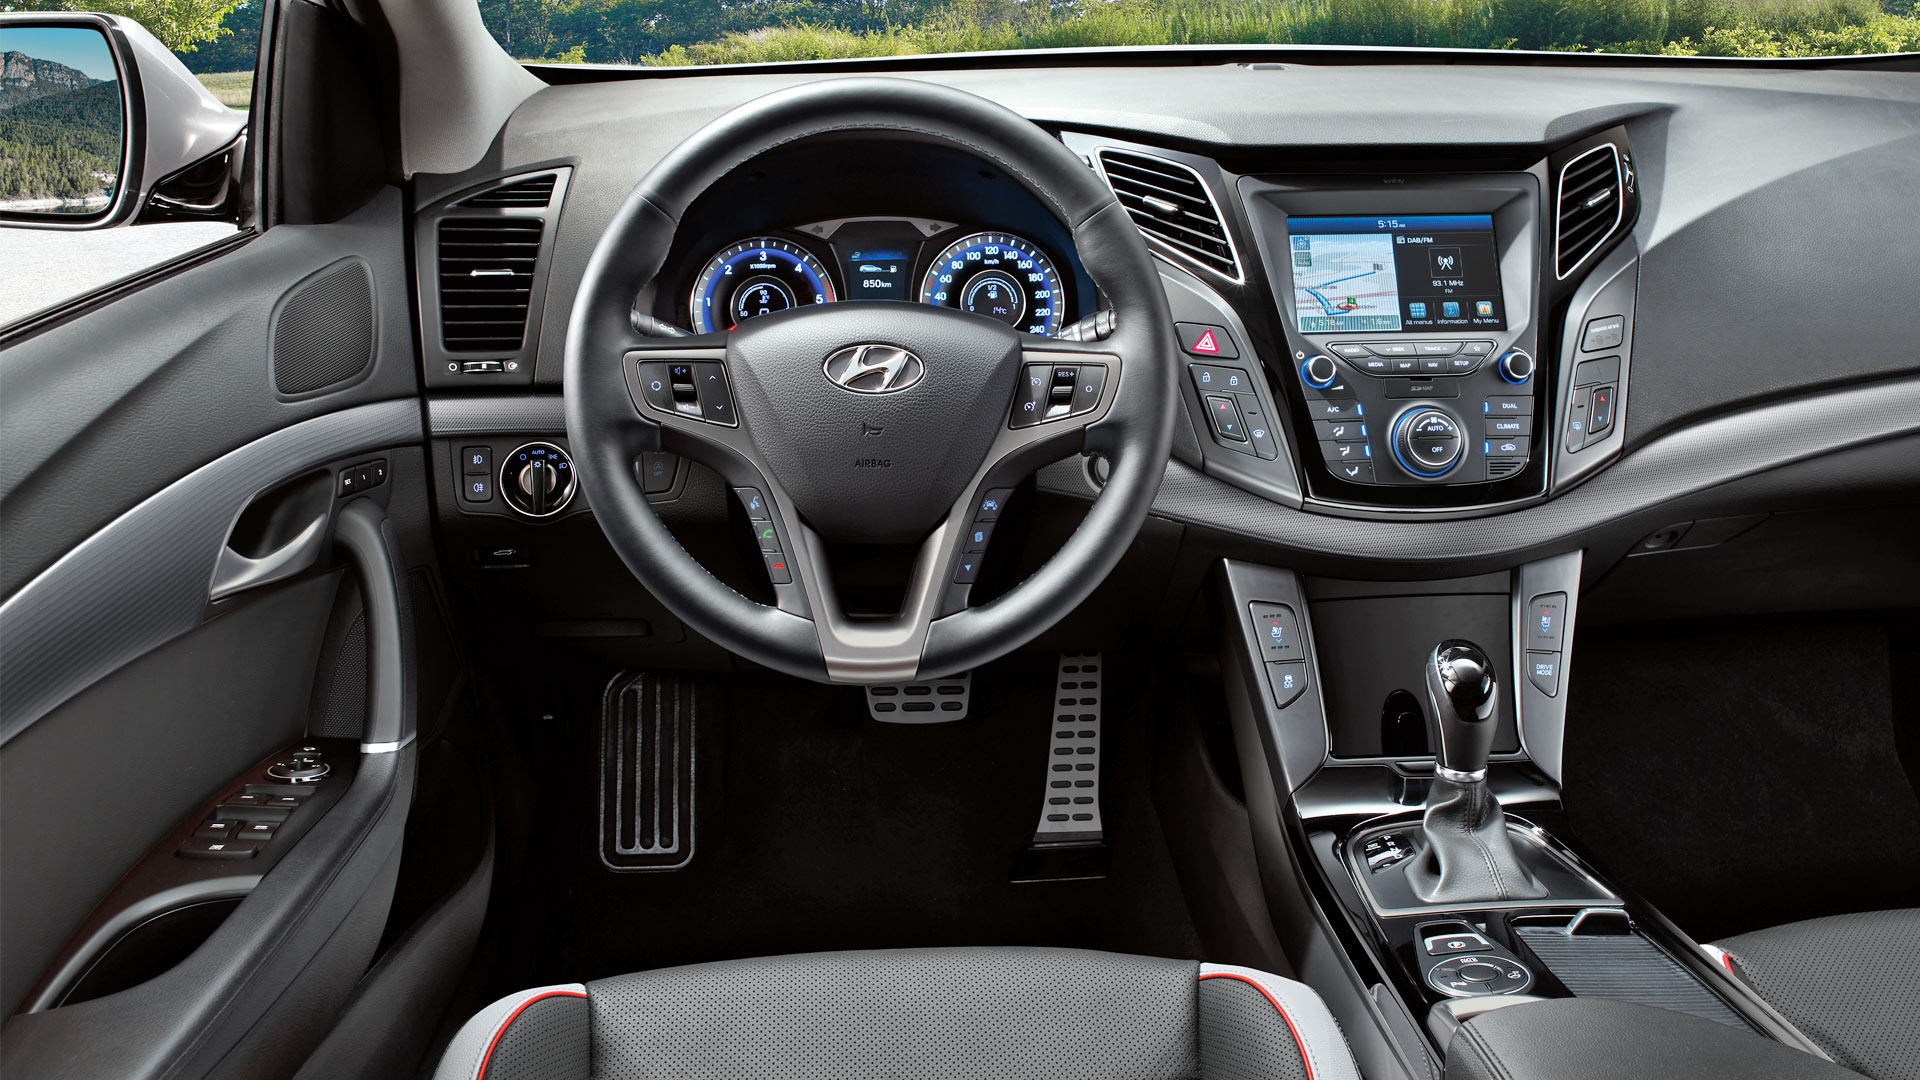 2019-Hyundai-i40-facelift-Interior